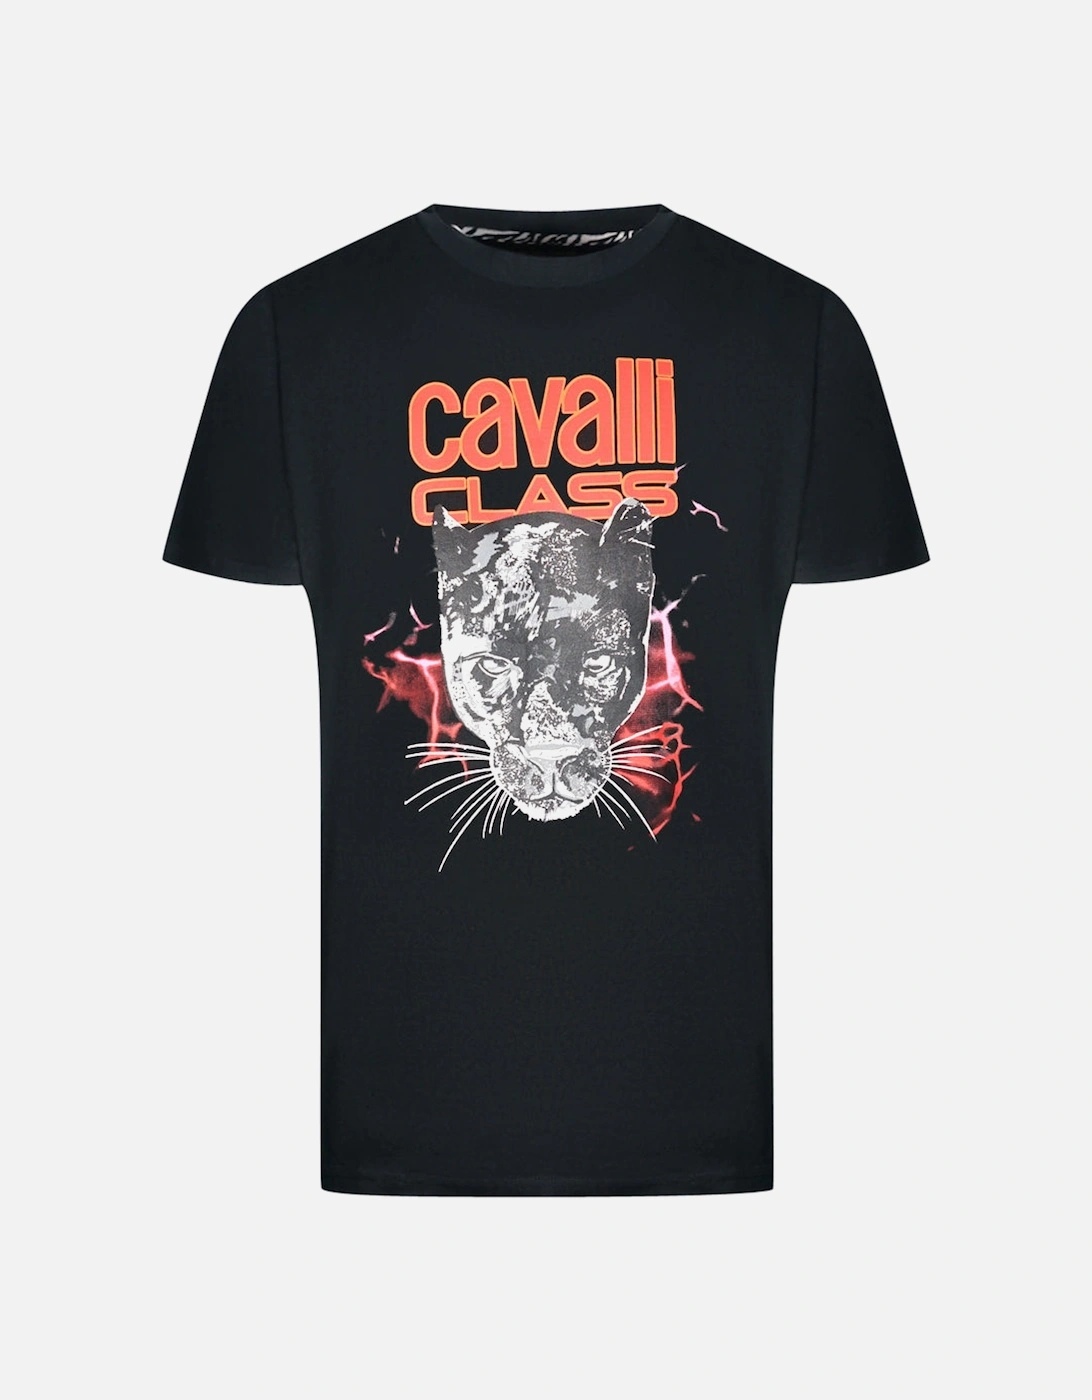 Cavalli Class Lightning Panther Design Black T-Shirt, 3 of 2